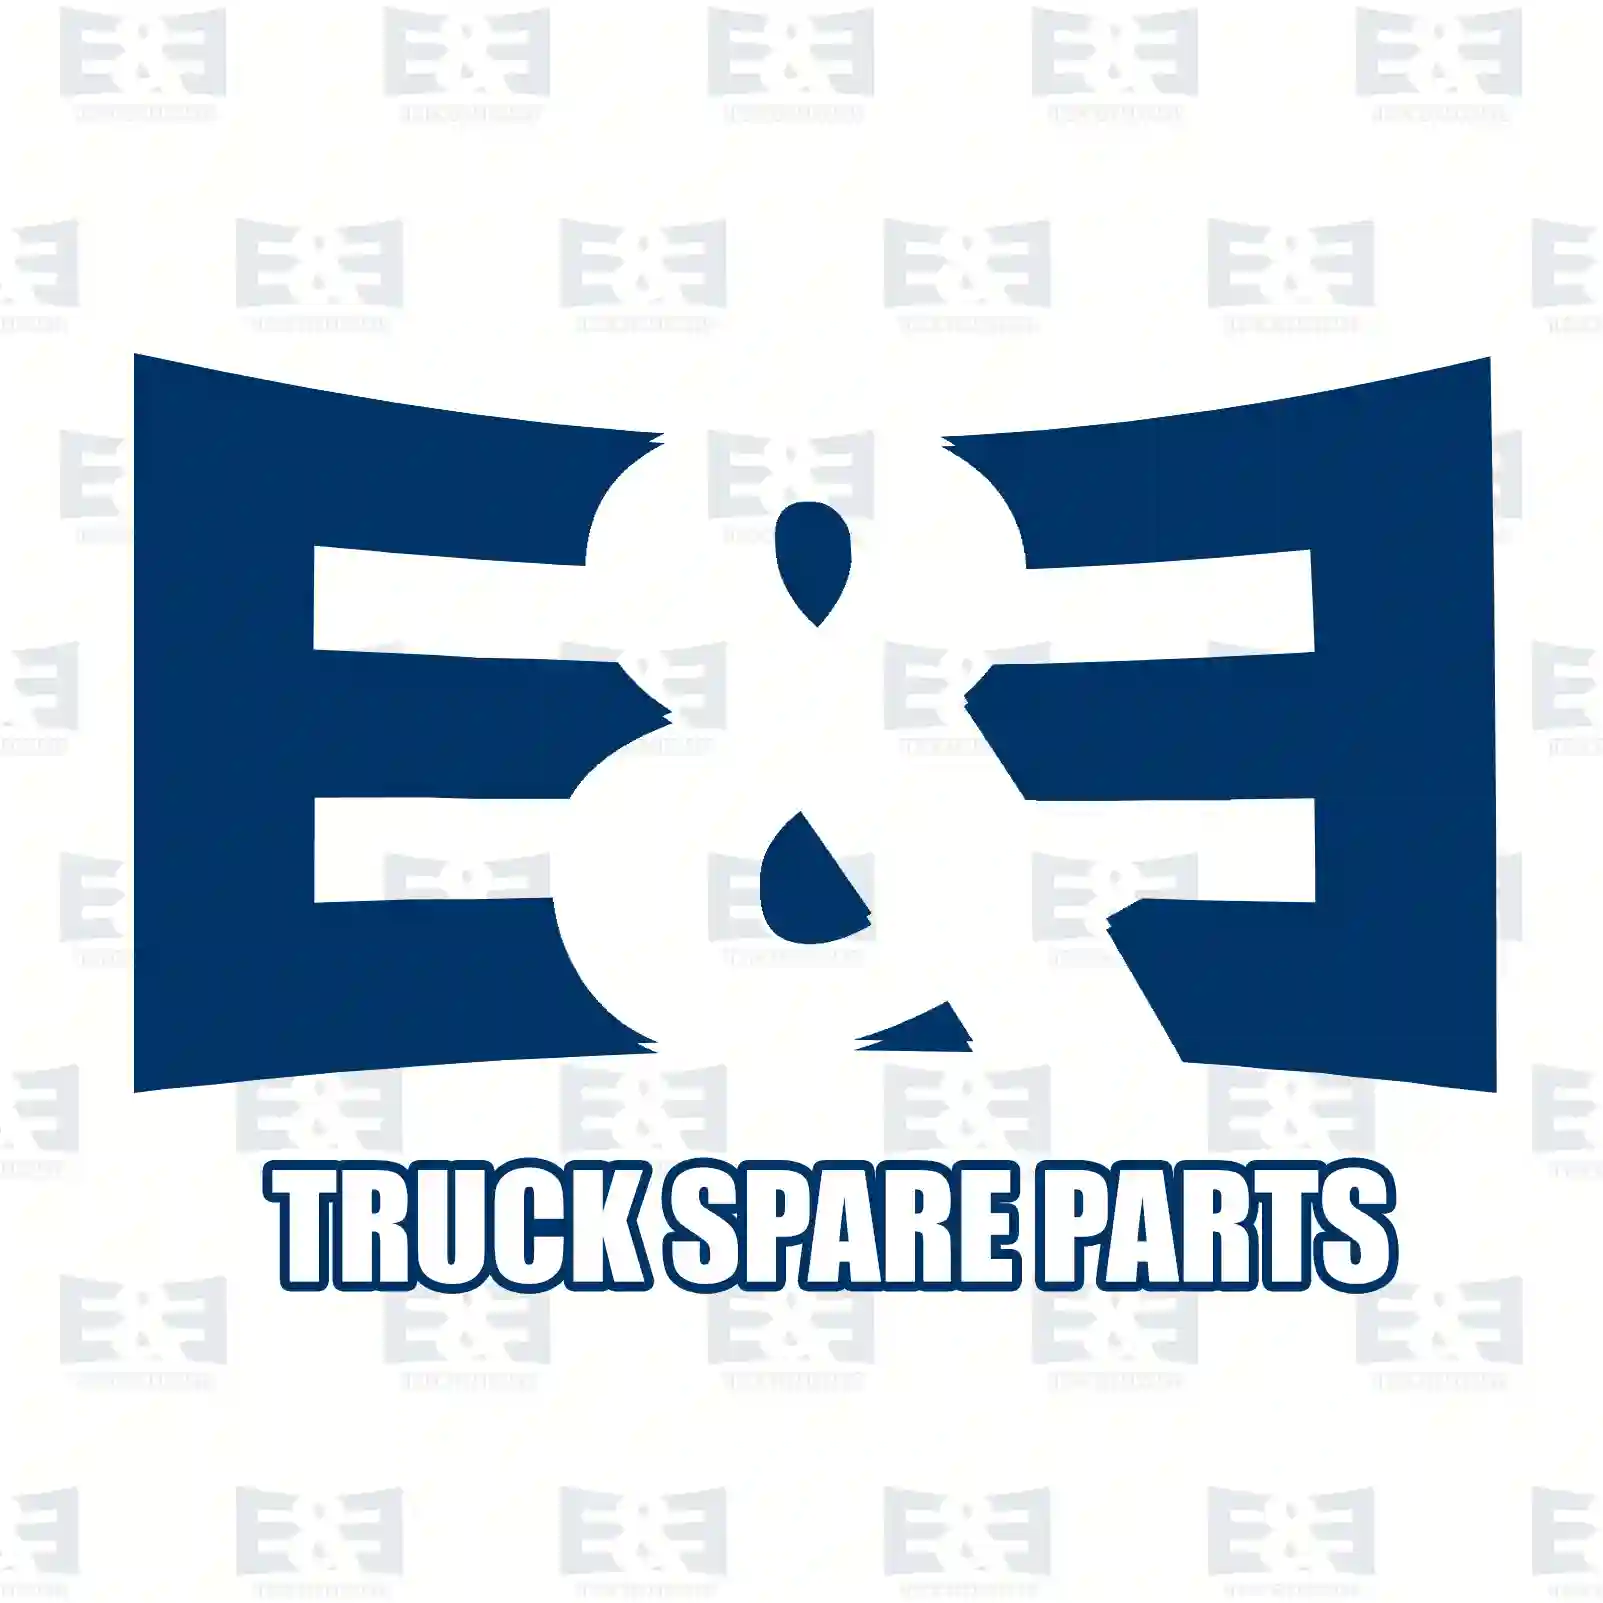 V-belt kit, 2E2203872, 06580420242, 06580422242, 06580432242, 06580472242, 06580722422, 06580732422, 51968206079, 0019975792, 0029977592, 0049979092, 007753112513 ||  2E2203872 E&E Truck Spare Parts | Truck Spare Parts, Auotomotive Spare Parts V-belt kit, 2E2203872, 06580420242, 06580422242, 06580432242, 06580472242, 06580722422, 06580732422, 51968206079, 0019975792, 0029977592, 0049979092, 007753112513 ||  2E2203872 E&E Truck Spare Parts | Truck Spare Parts, Auotomotive Spare Parts